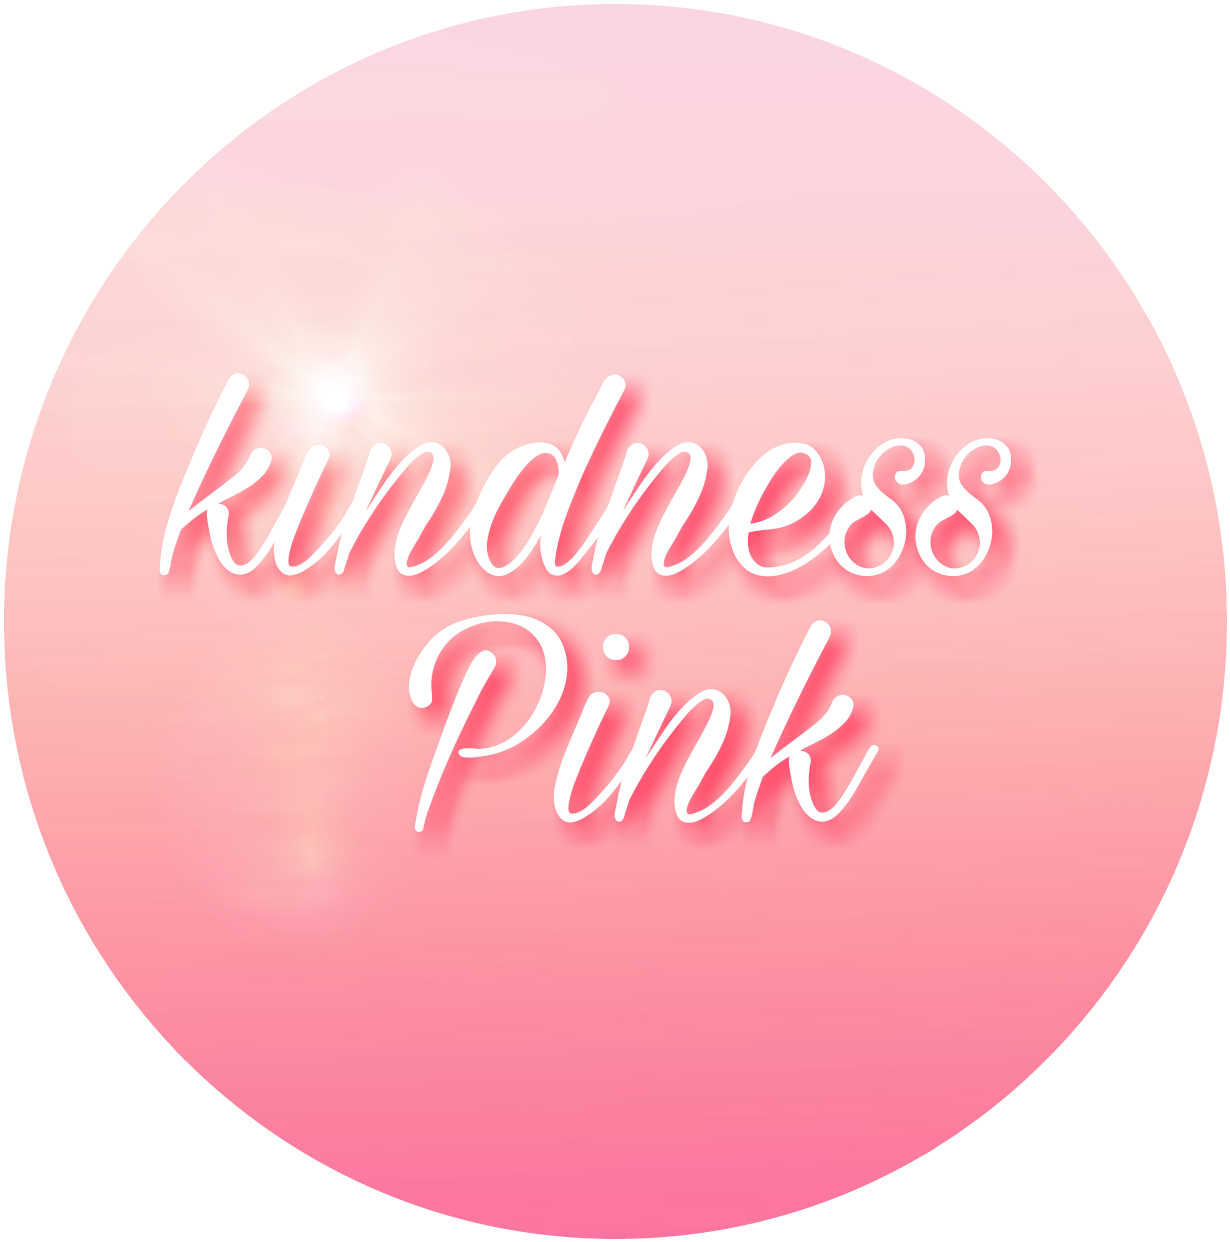 Kindness Pink